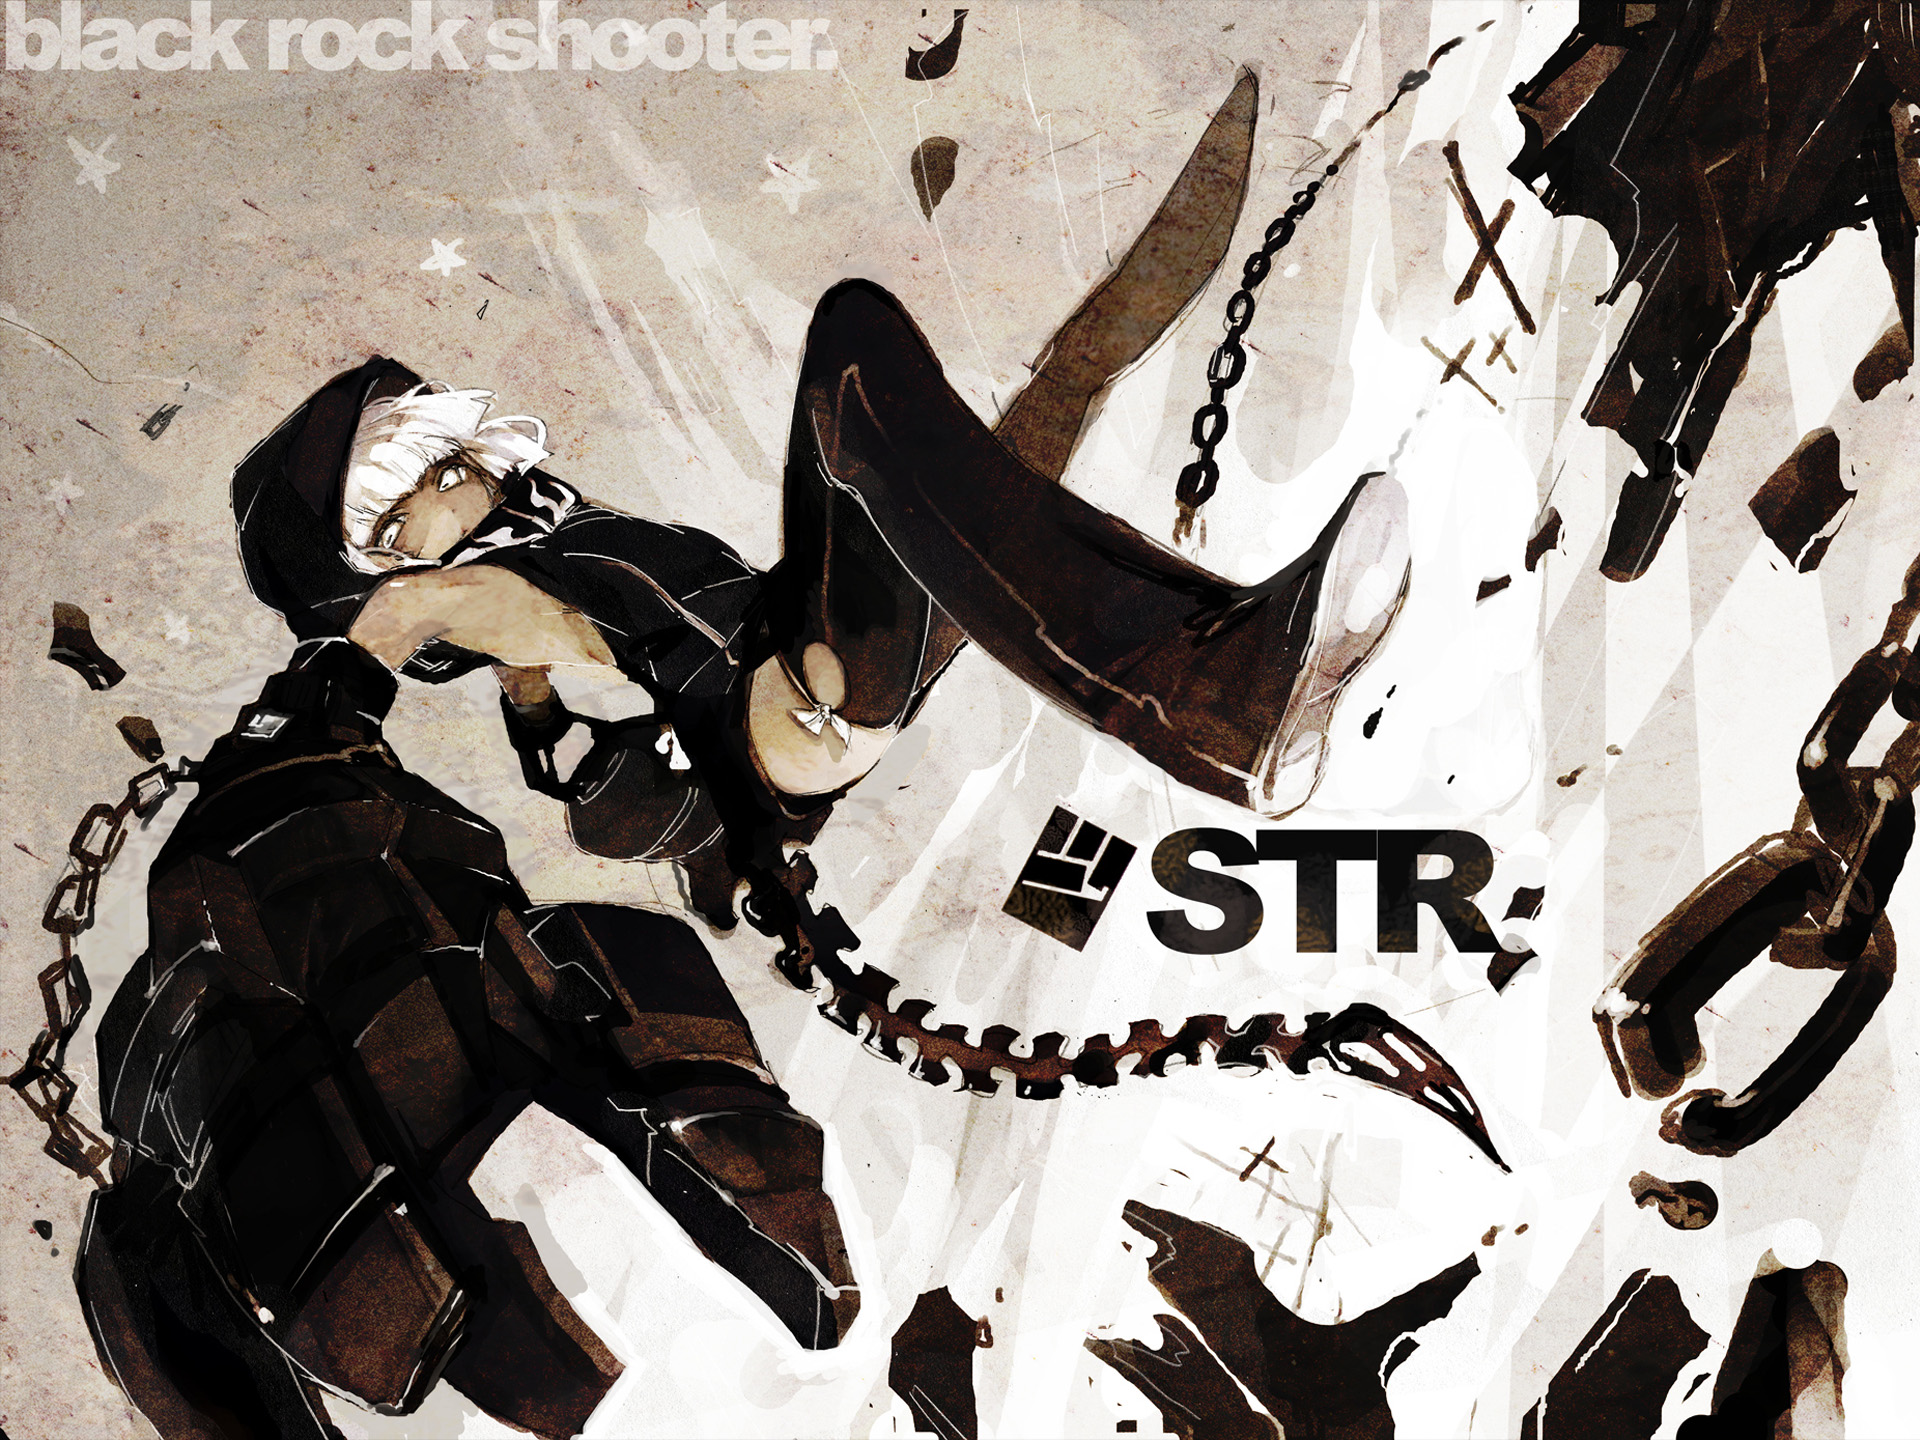 Strength Black Rock Shooter 1920x1440